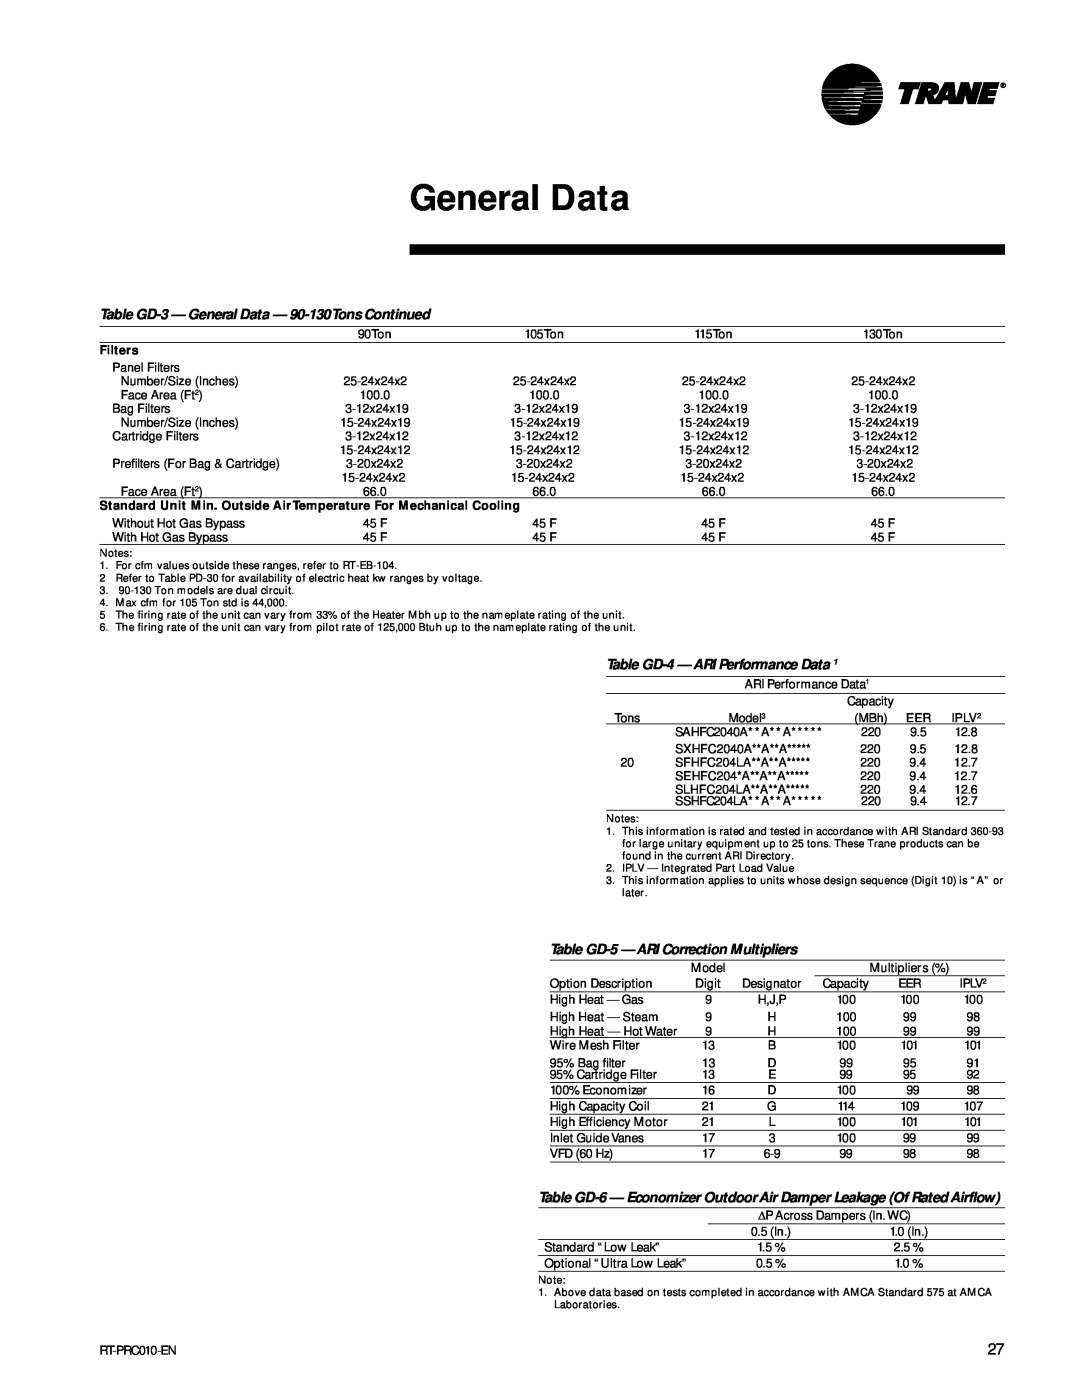 Trane RT-PRC010-EN manual Table GD-3- General Data - 90-130TonsContinued, Table GD-4— ARI Performance Data 